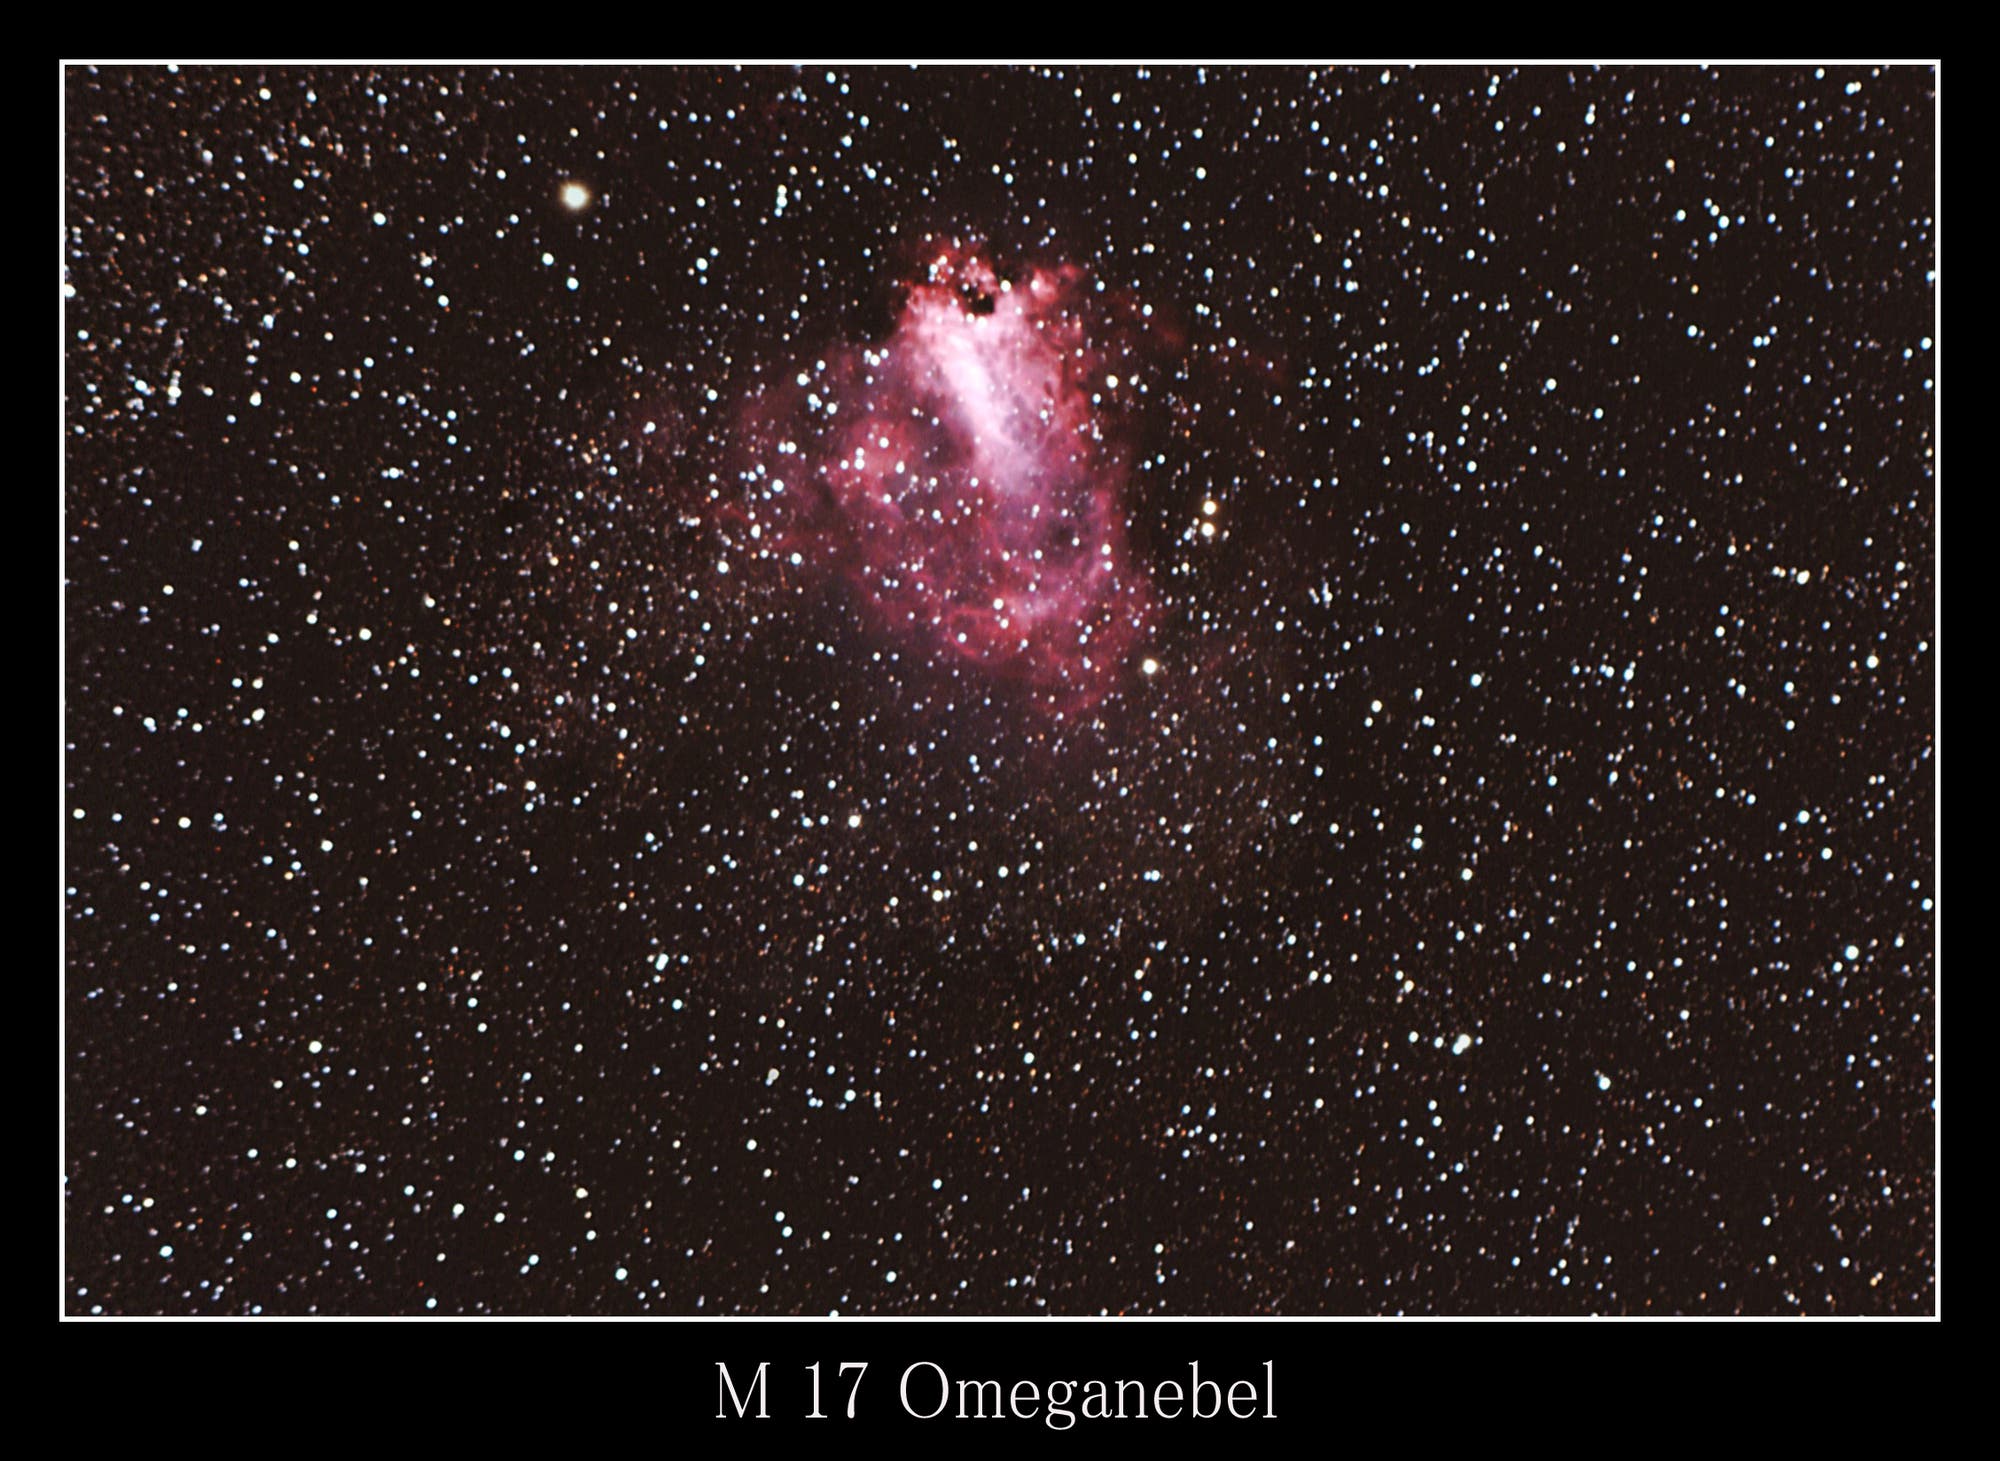 M 17 Omeganebel